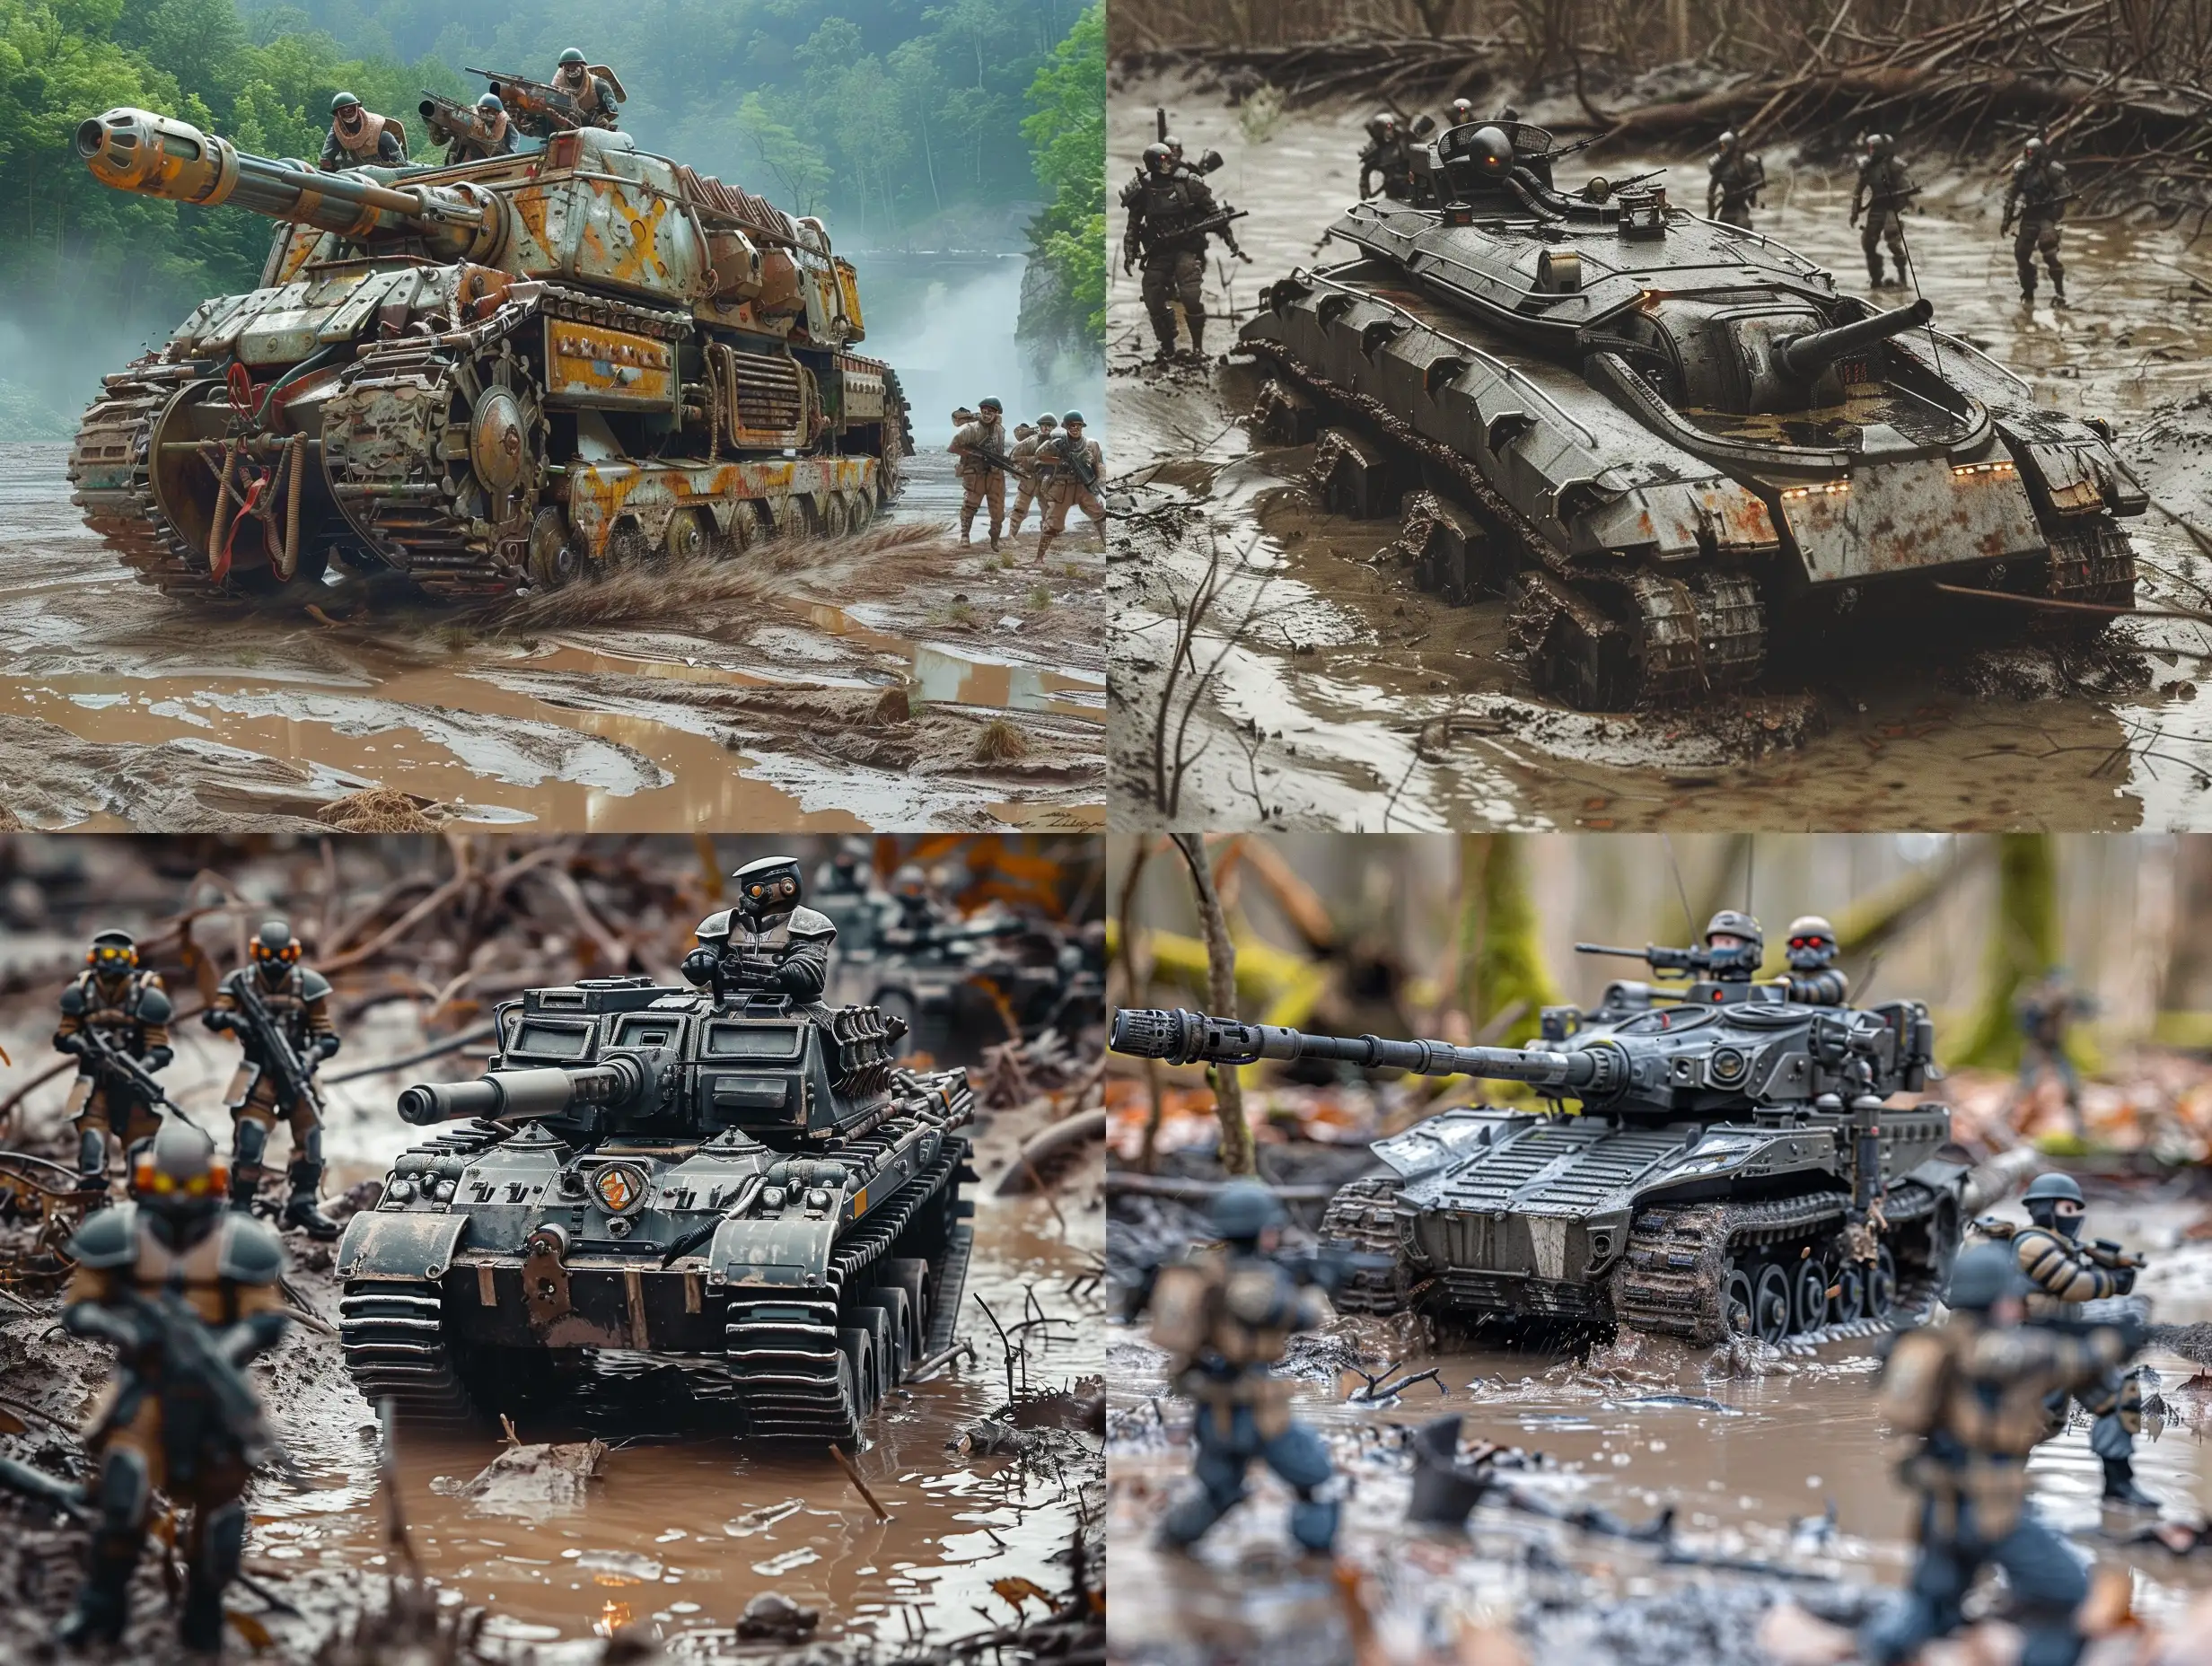 DieselPunk-Style-Tank-and-Soldiers-Maneuvering-in-Muddy-Wilderness